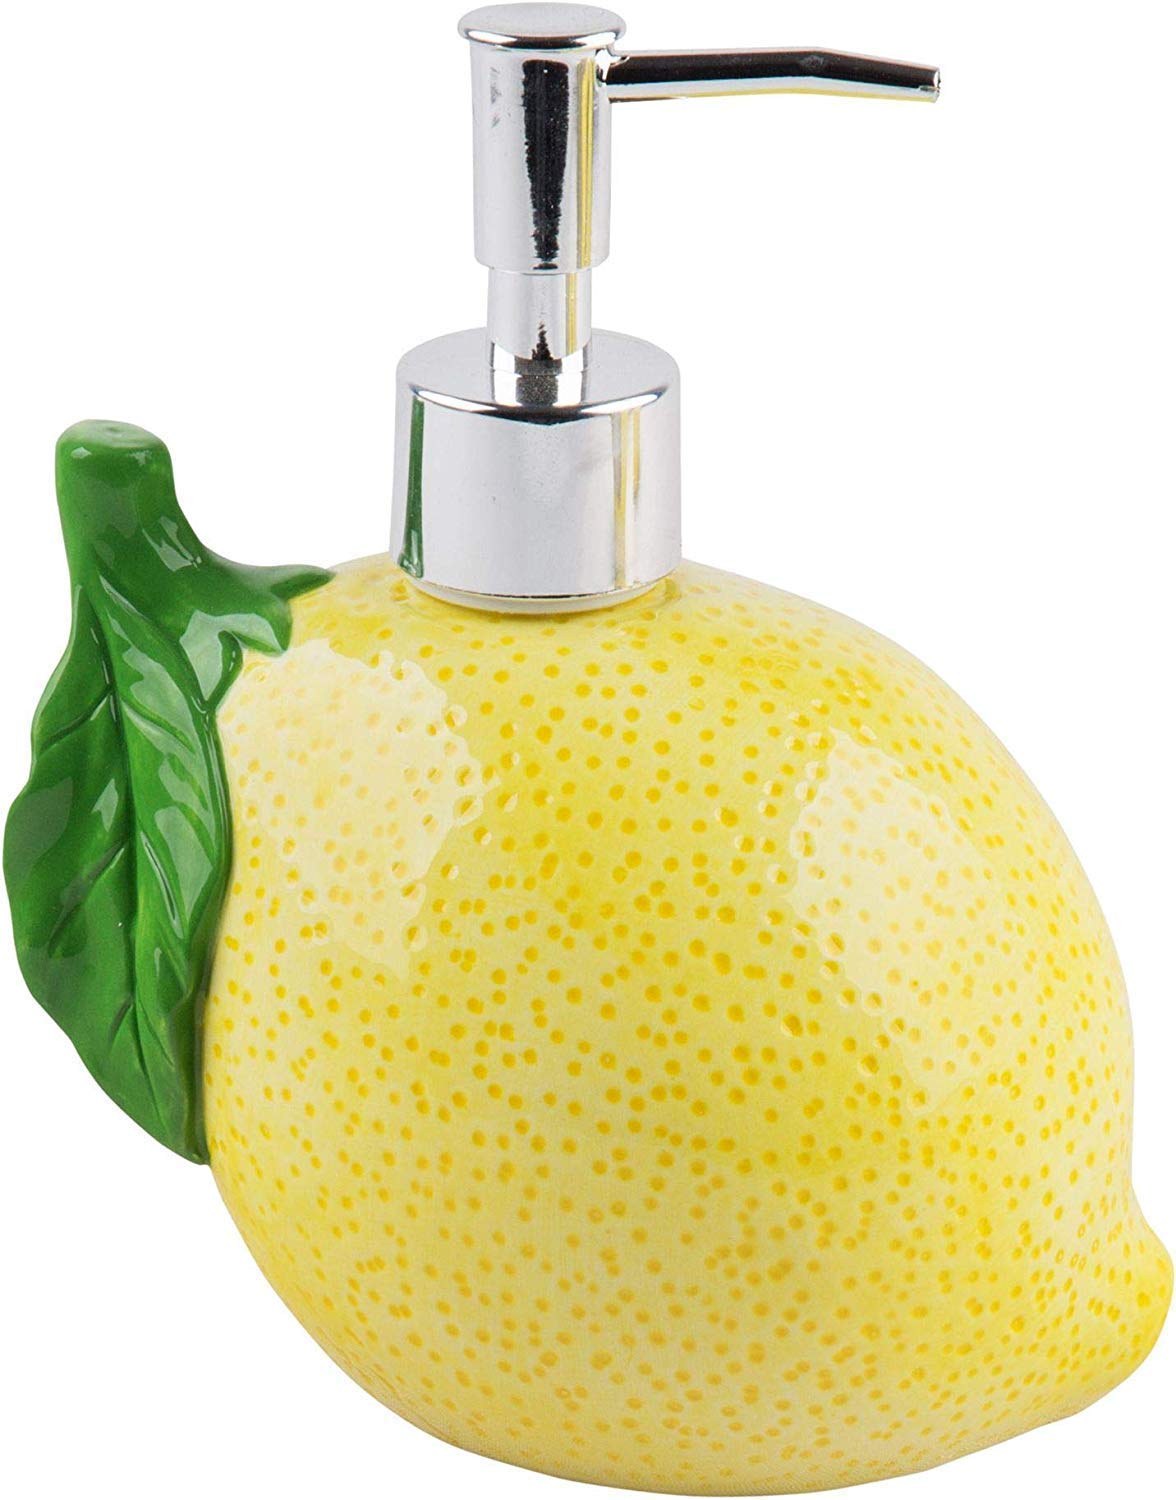 Home Essentials Ceramic Lemon Shaped Soap Dispenser- Lotion Dispenser for Kitchen or Bathroom Countertops